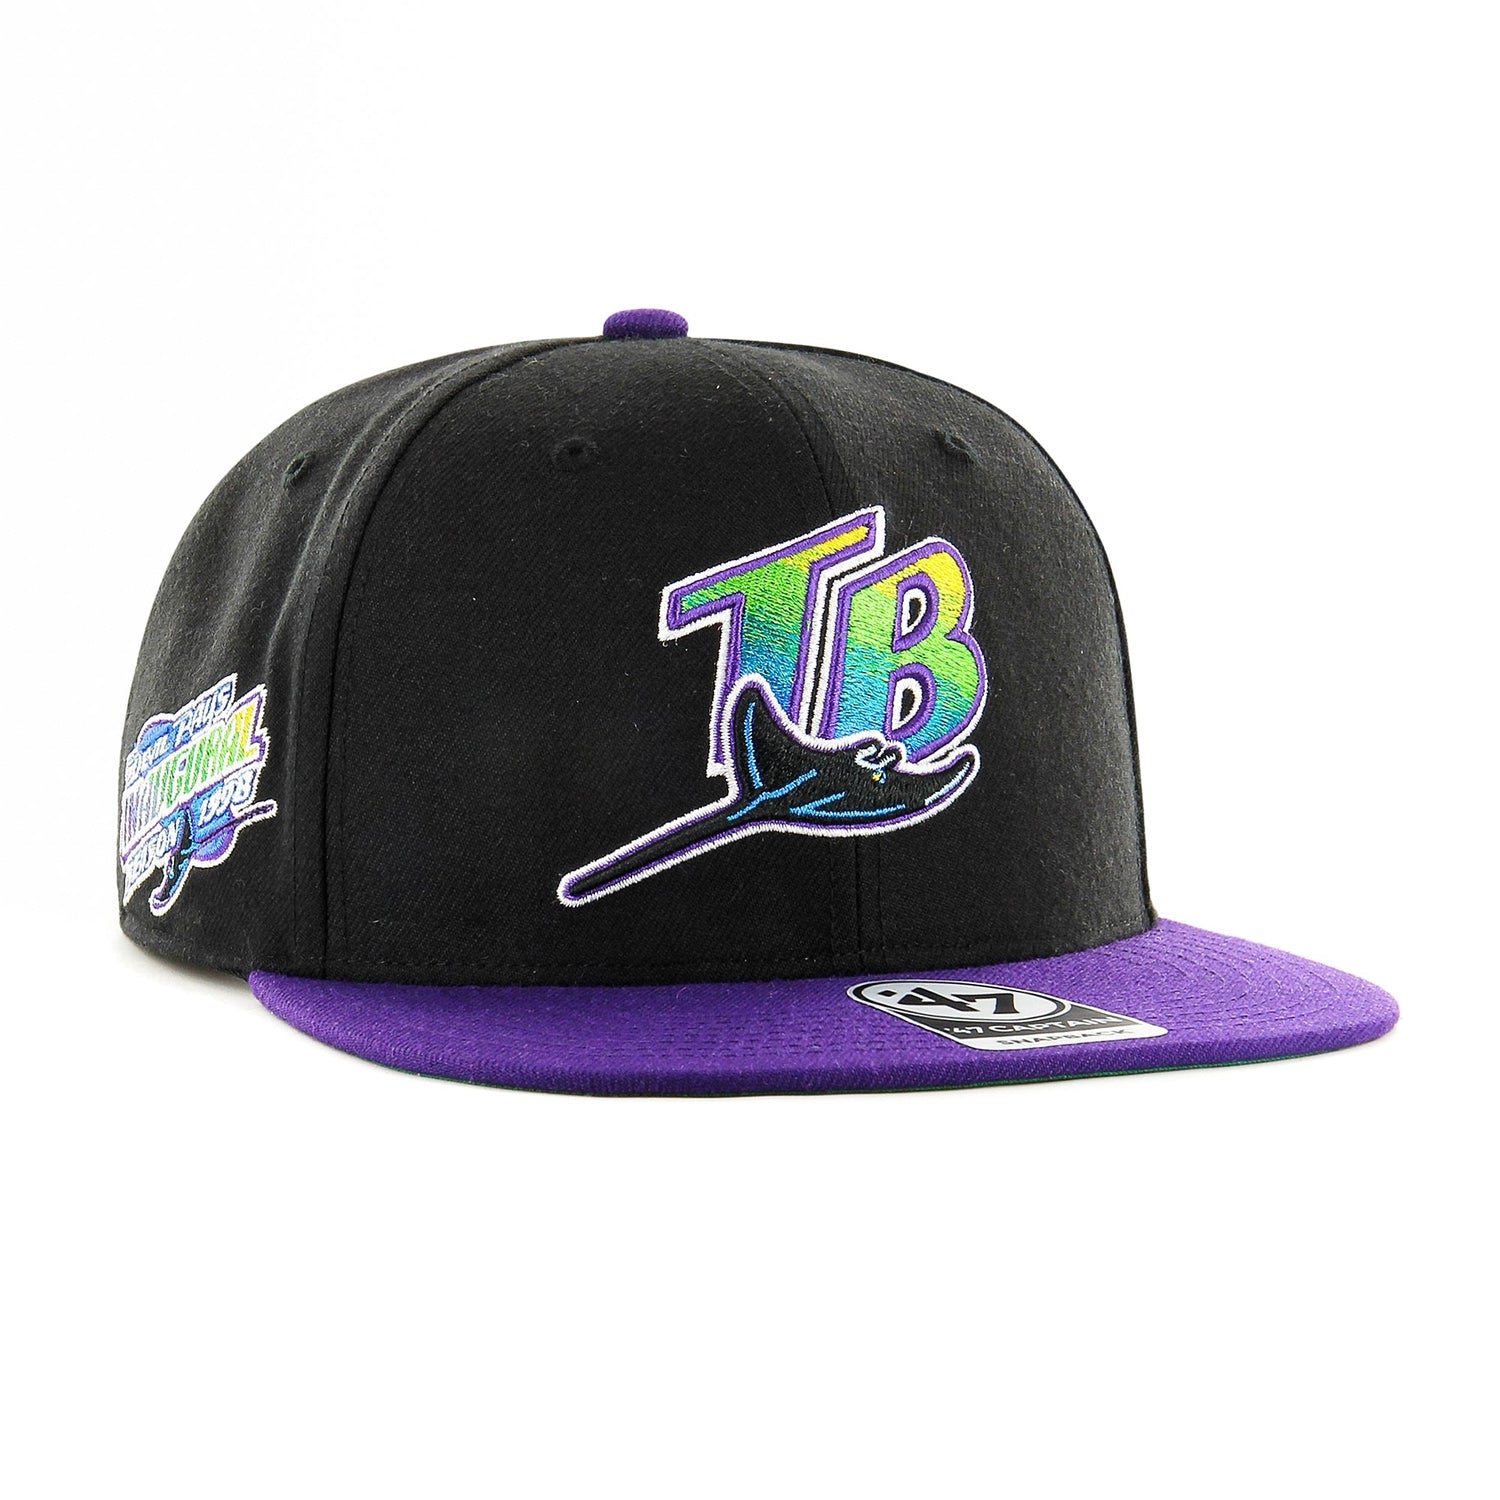 47 Brand Sureshot Captain Tampa Bay Rays Snapback Inaugural Patch Hat - Black, Purple